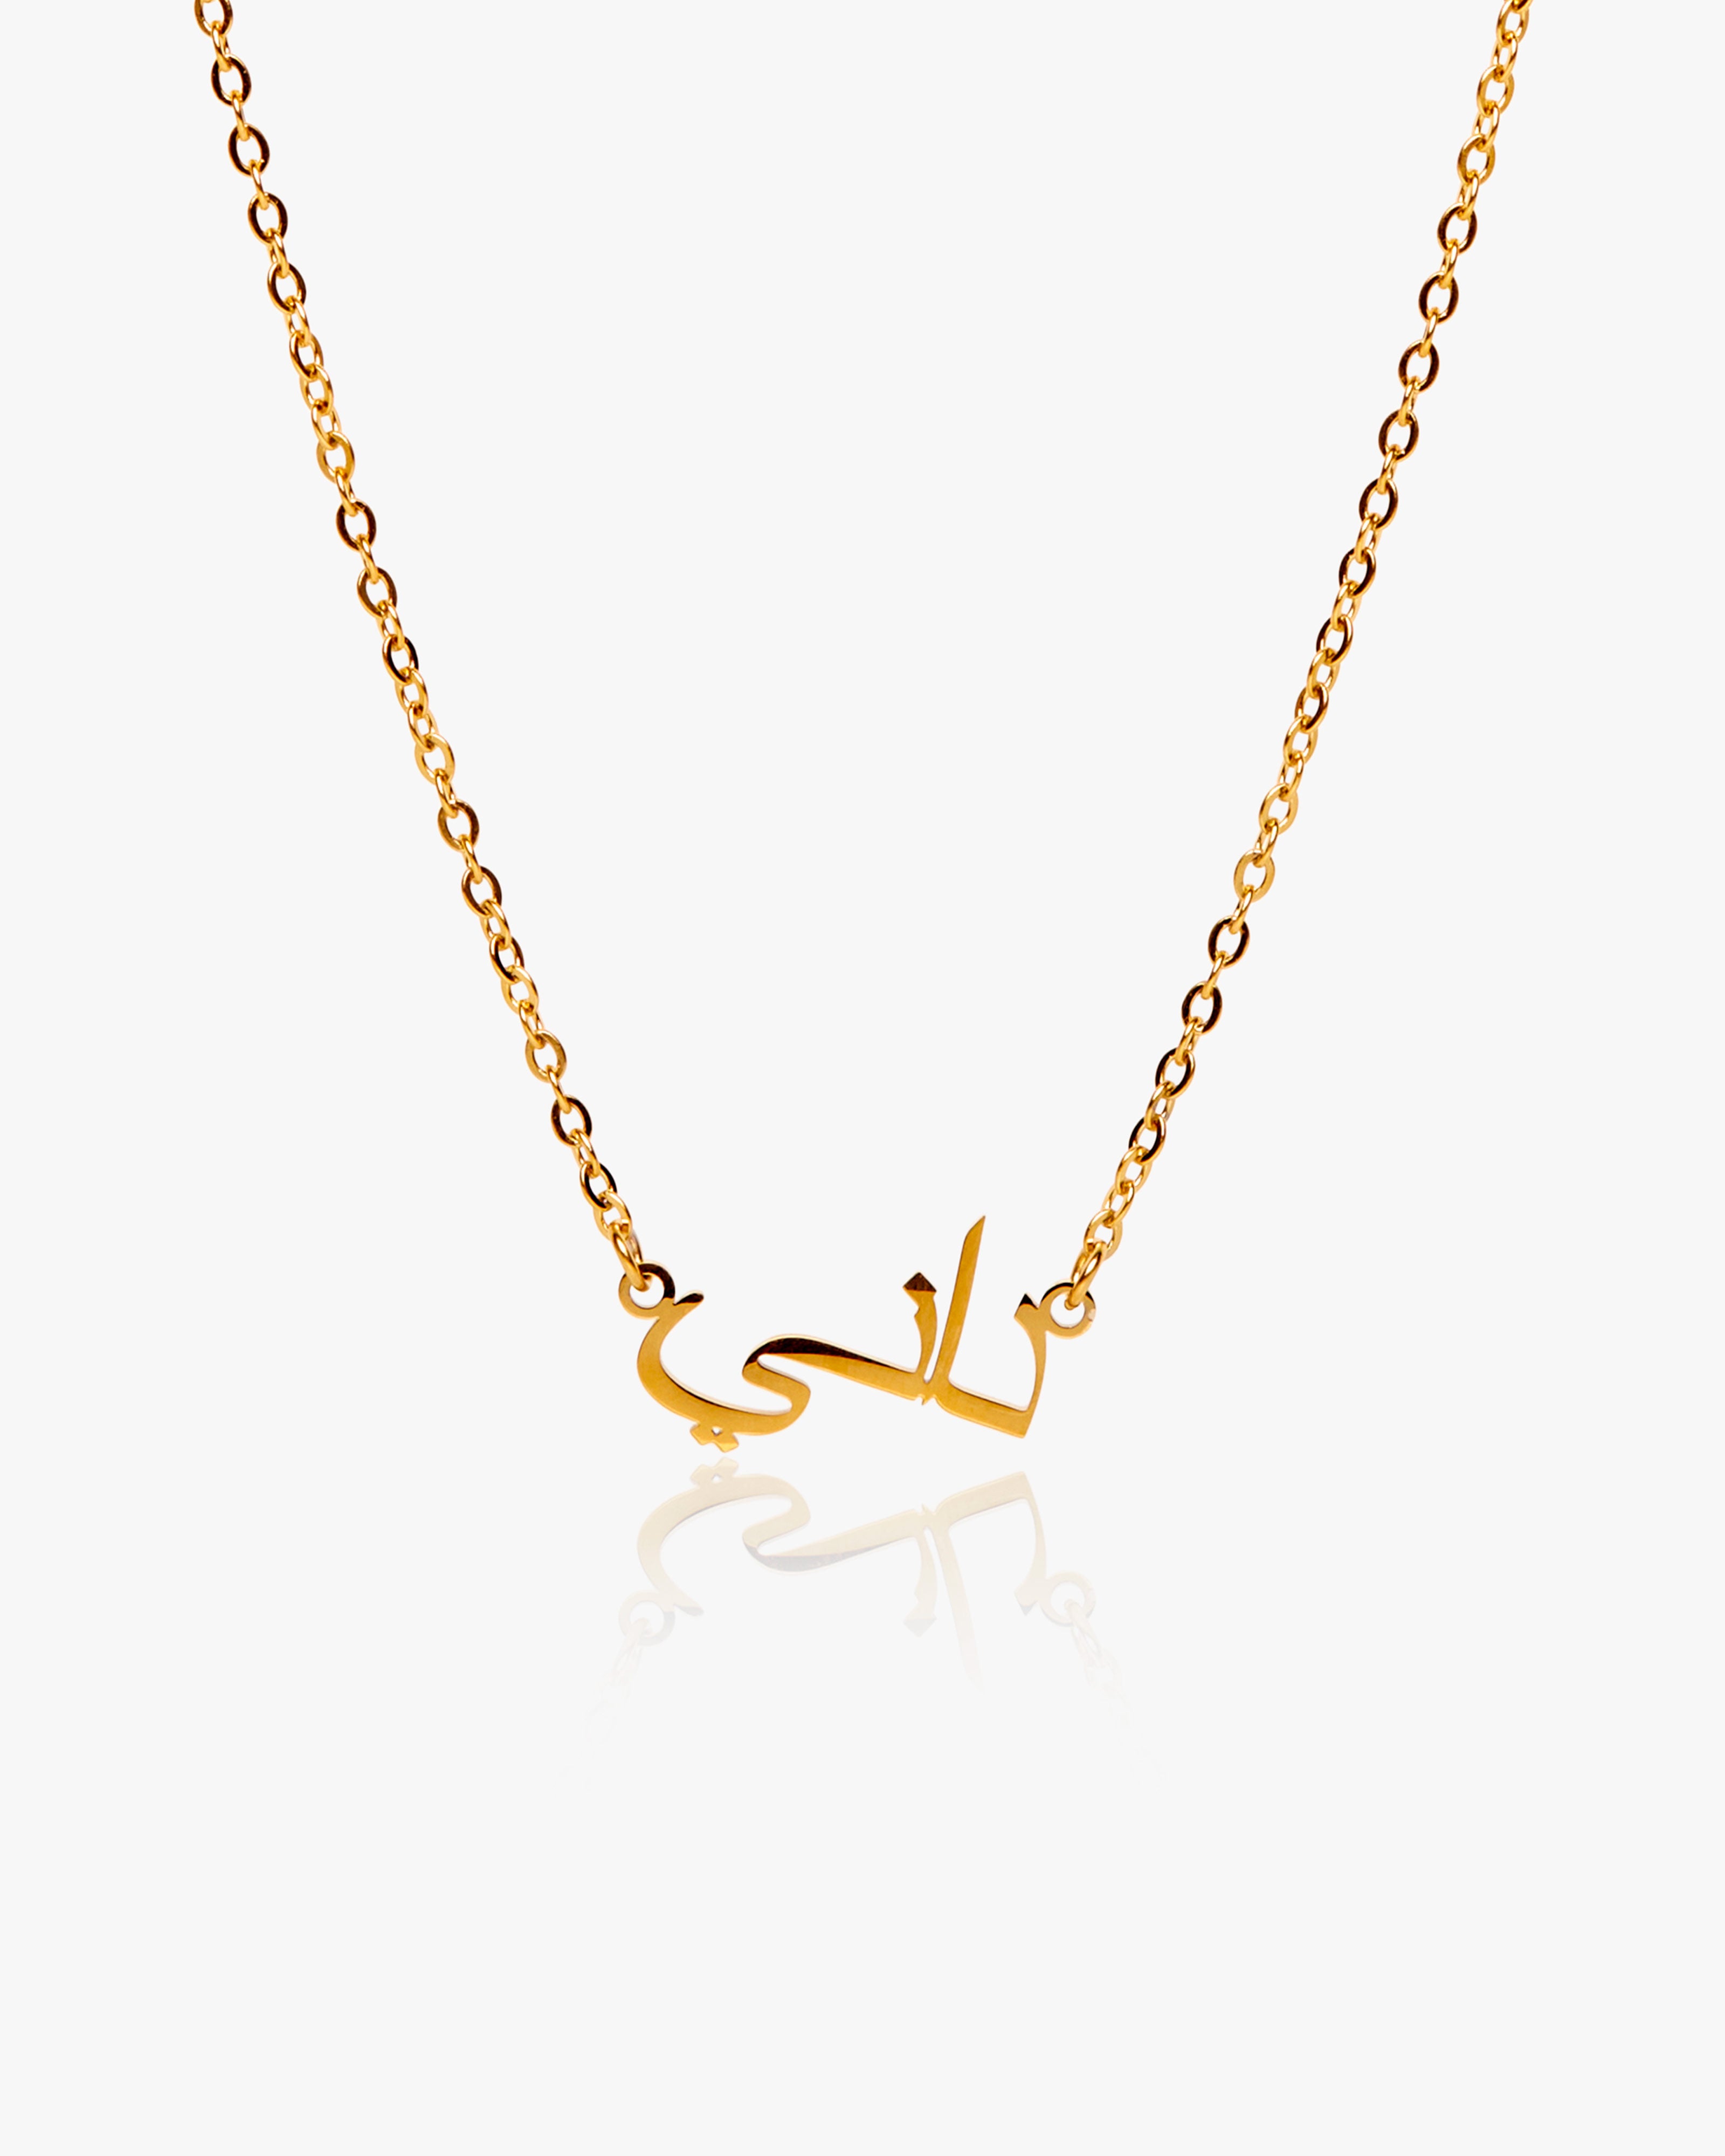 Arabic Custom Name Necklace